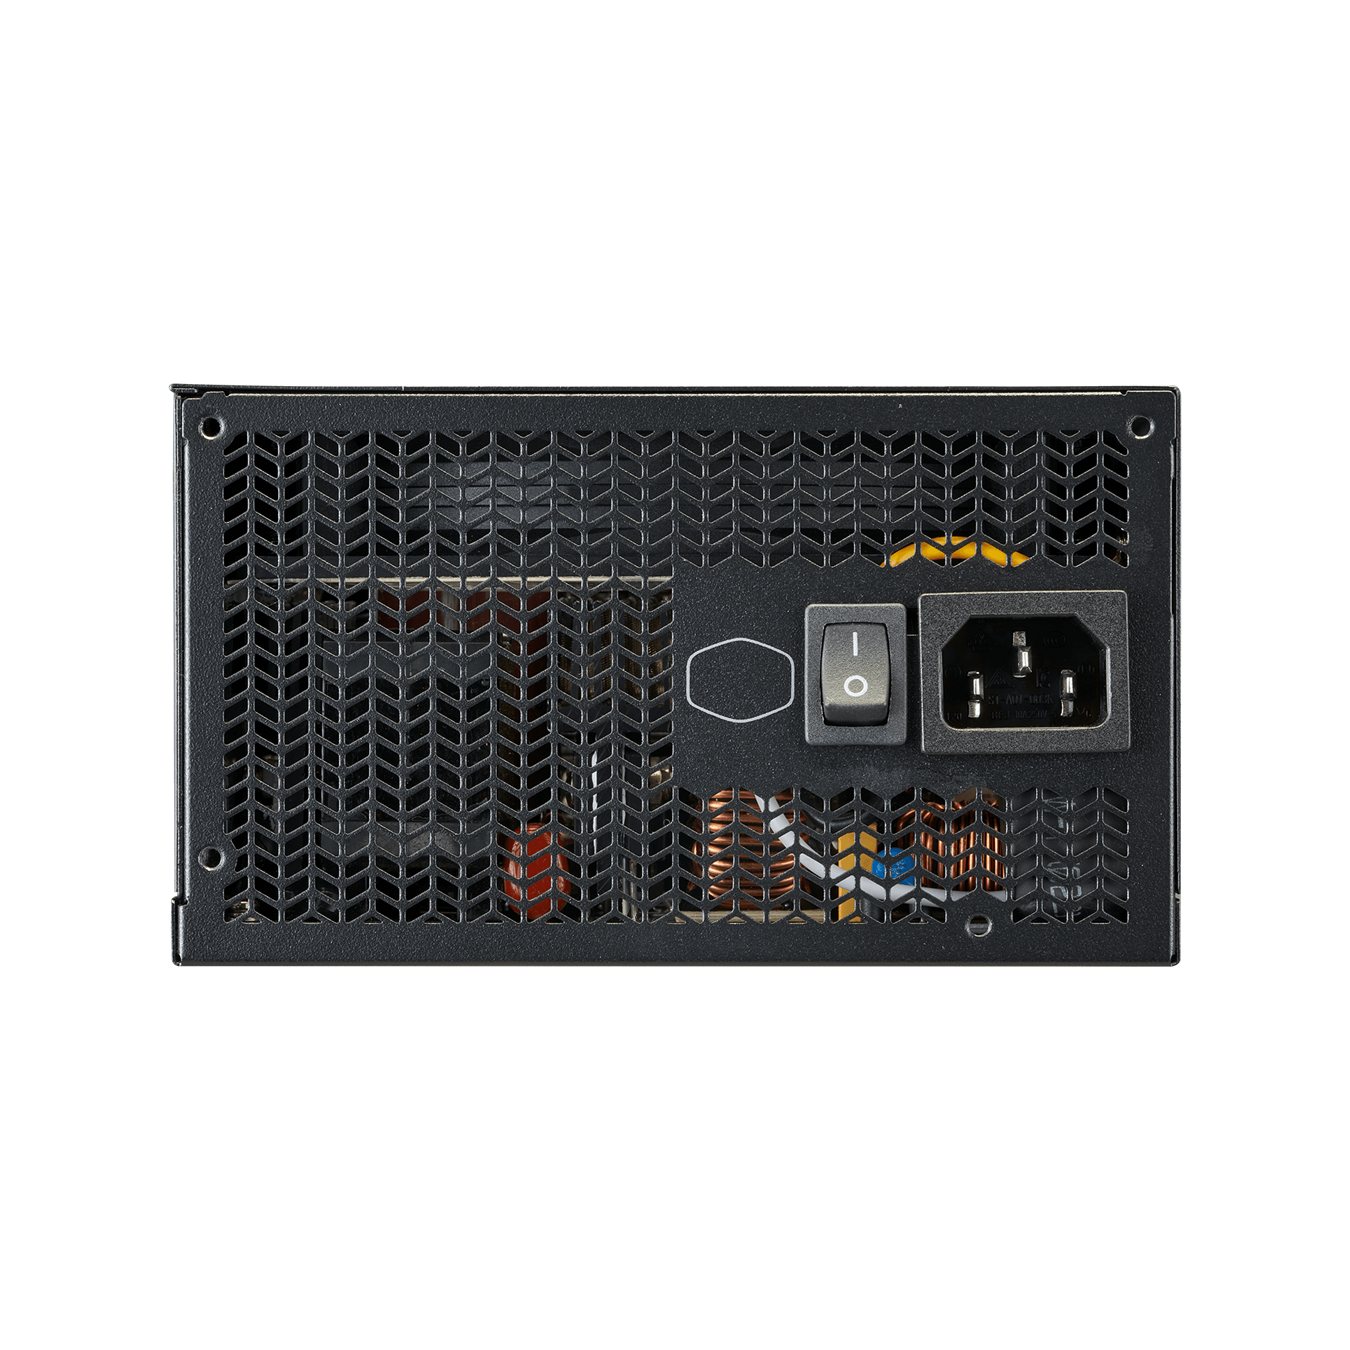 XG650 Plus Platinum - Power switch and socket